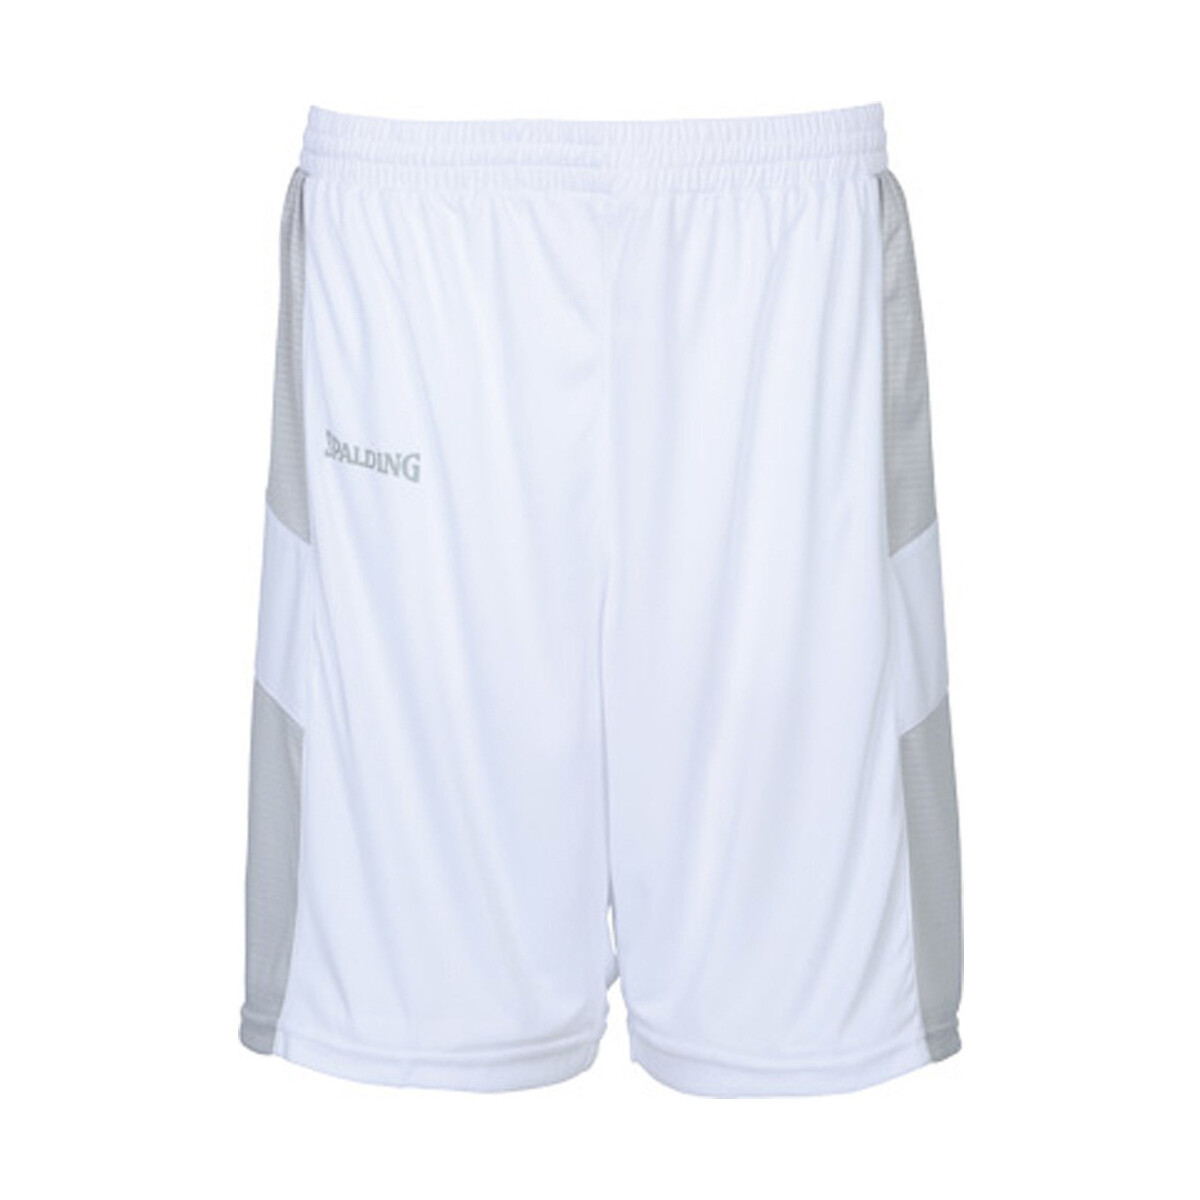 textil Shorts / Bermudas Spalding ALL STAR SHORTS BLPL Blanco